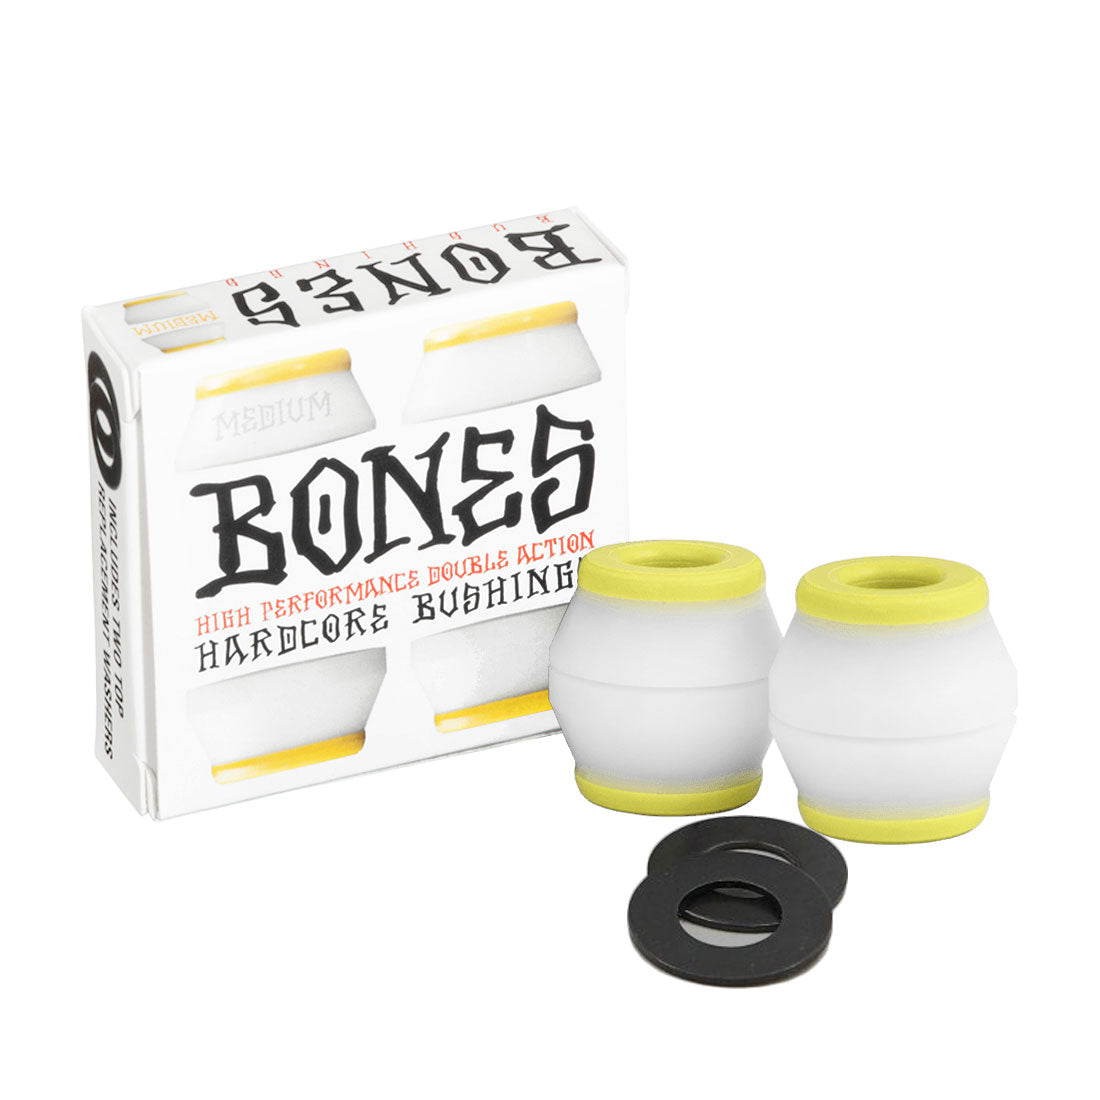 Bones Hardcore Conical Bushings 4pk - White White Medium | 91A Skateboard Hardware and Parts